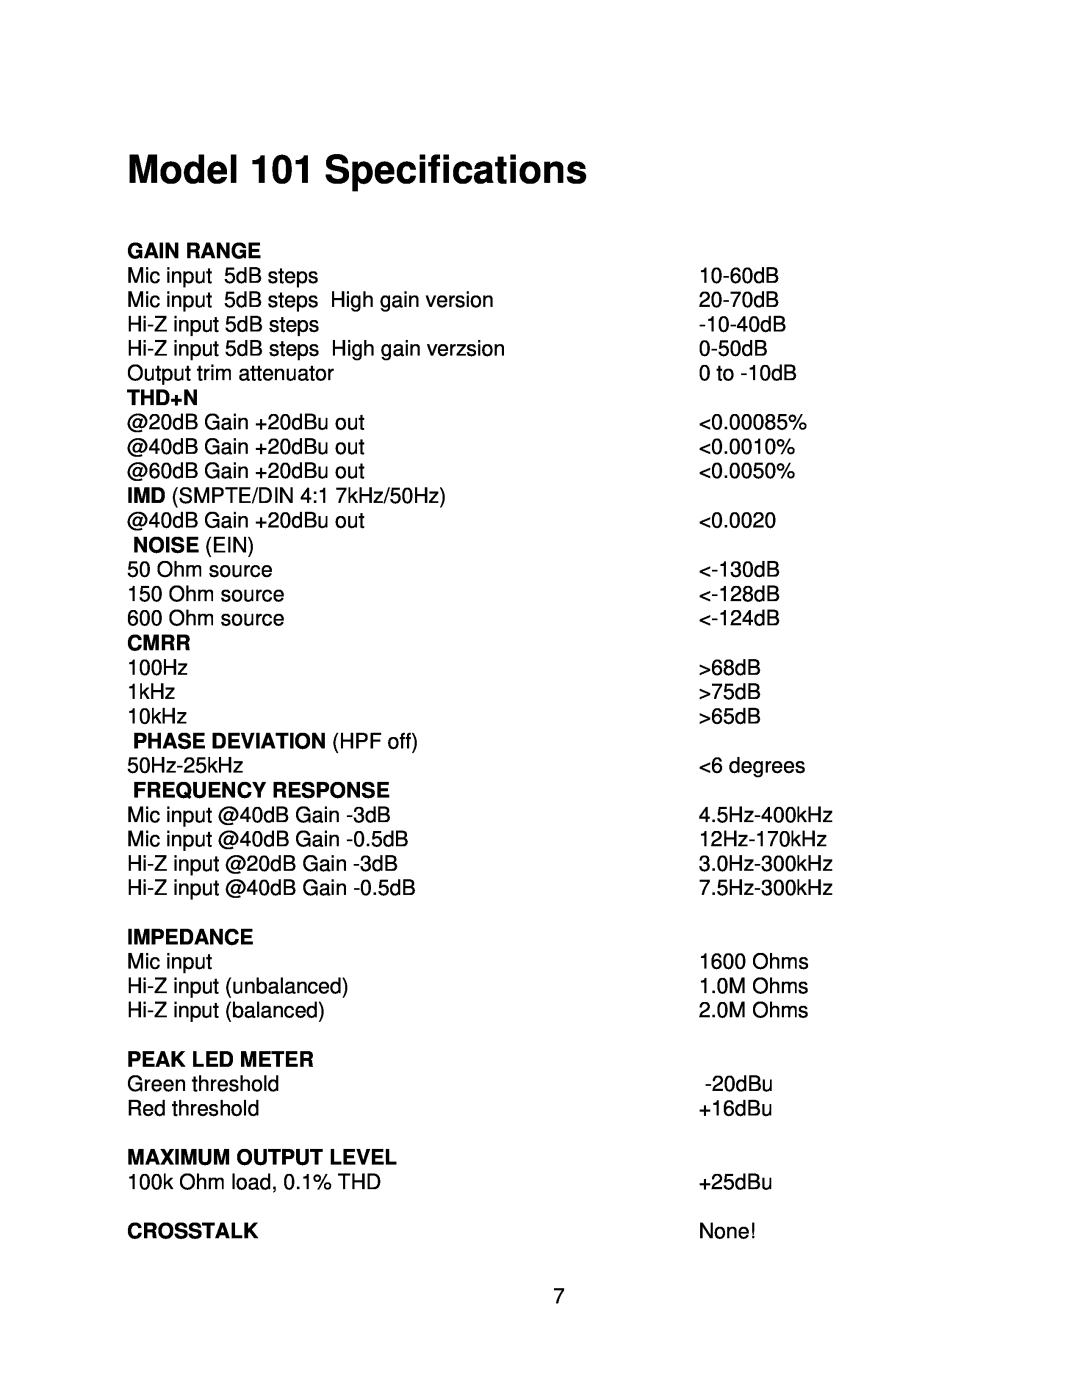 Boulder Amplifiers Model 101 Specifications, Gain Range, Thd+N, CMRR 100Hz 1kHz 10kHz, Frequency Response, Impedance 